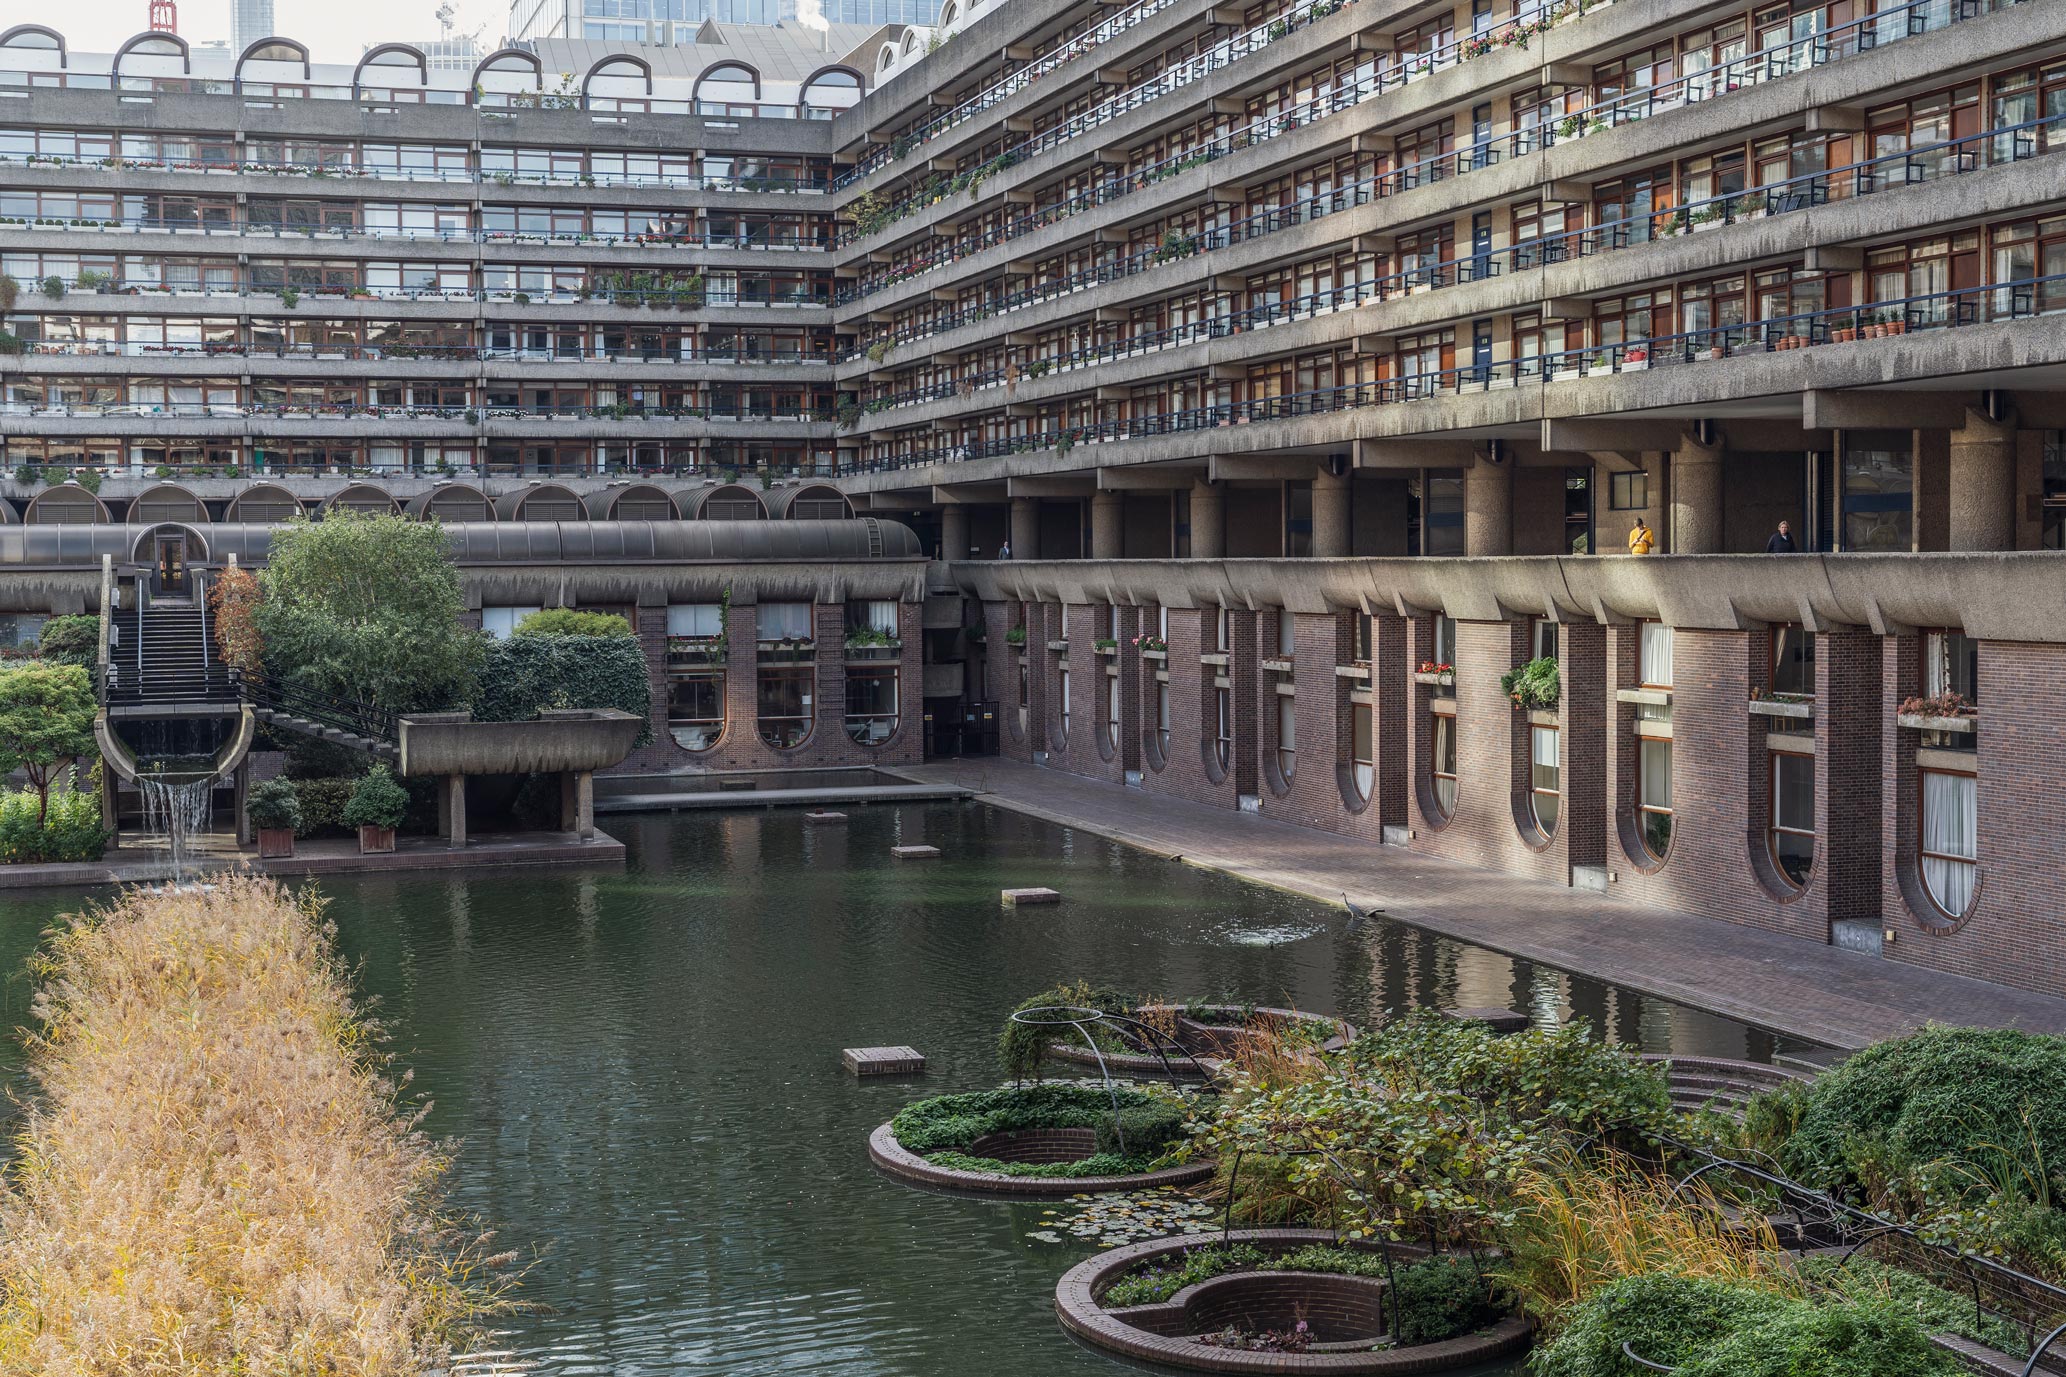 Architecture Building Block Of Flats Brutalism London Barbican UK Water Plants 2066x1377